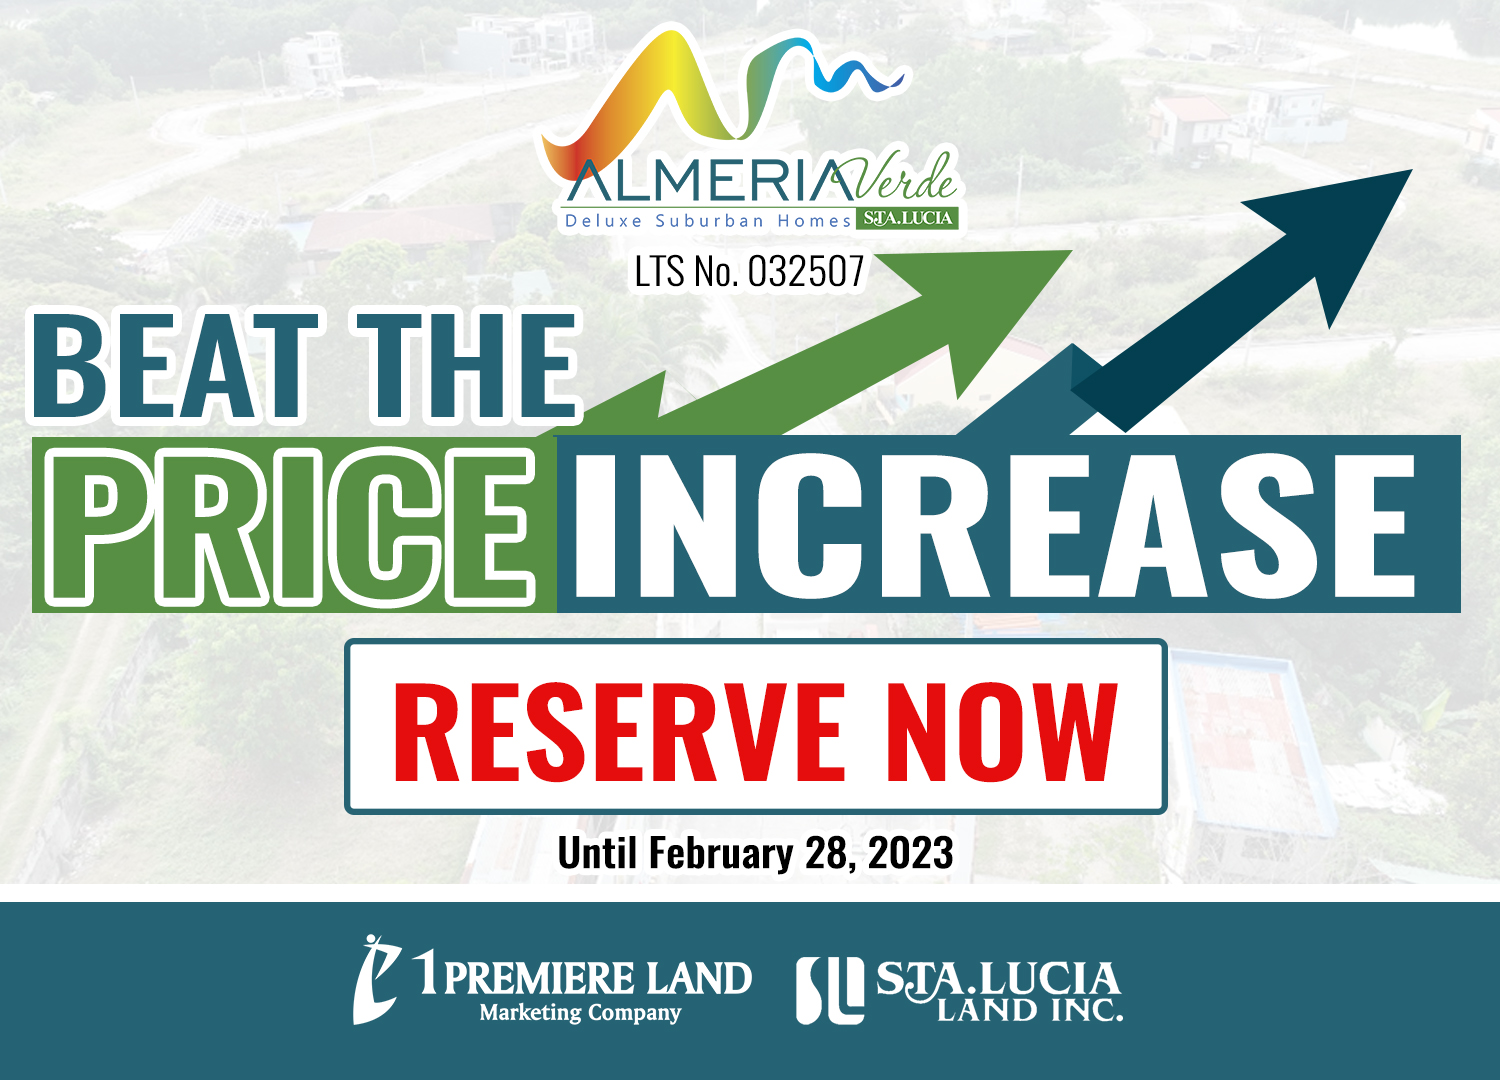 almeria verde beat the price increase!